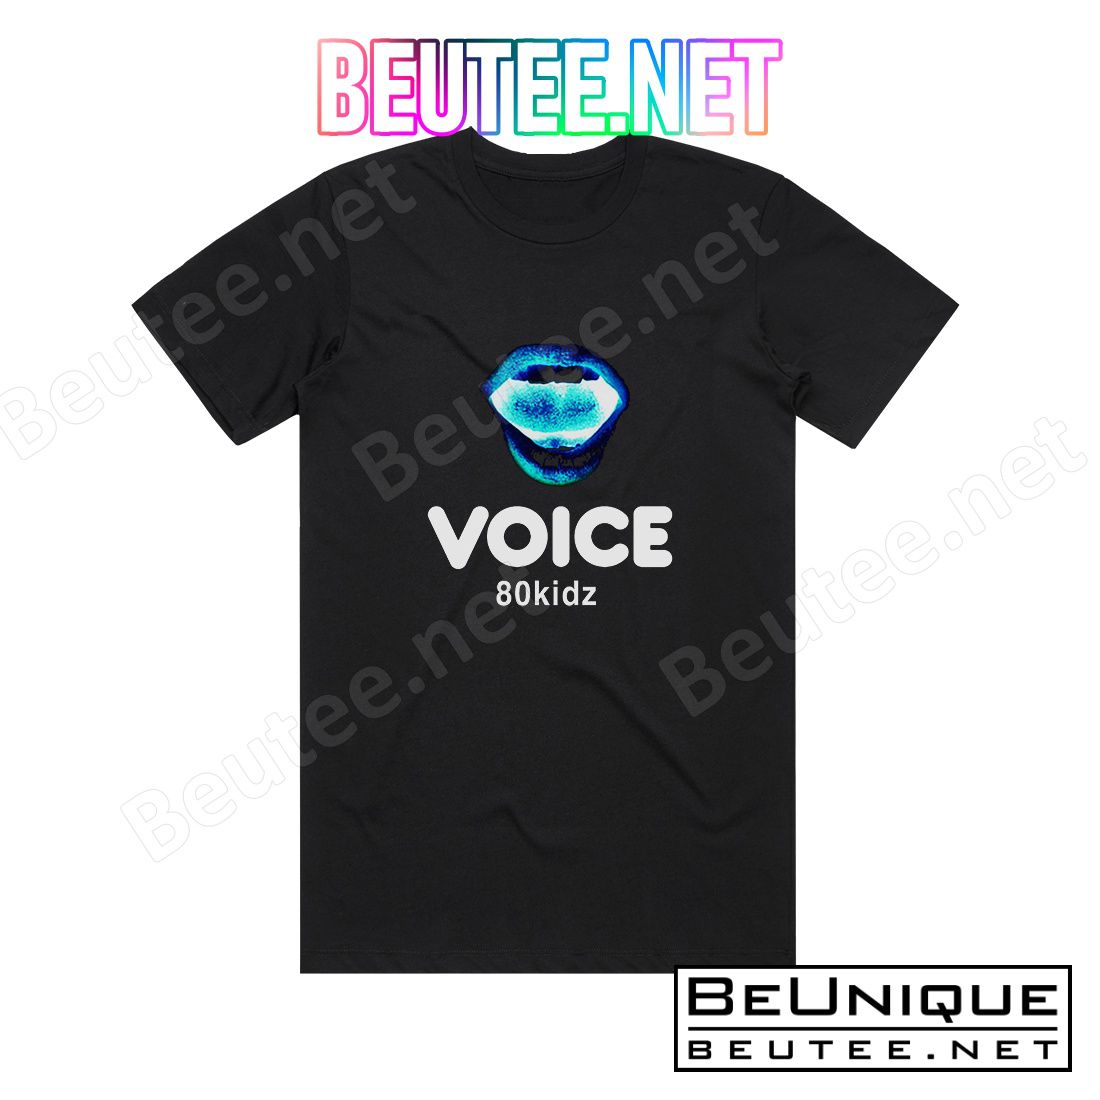 Perfume Voice Album Cover T-Shirt